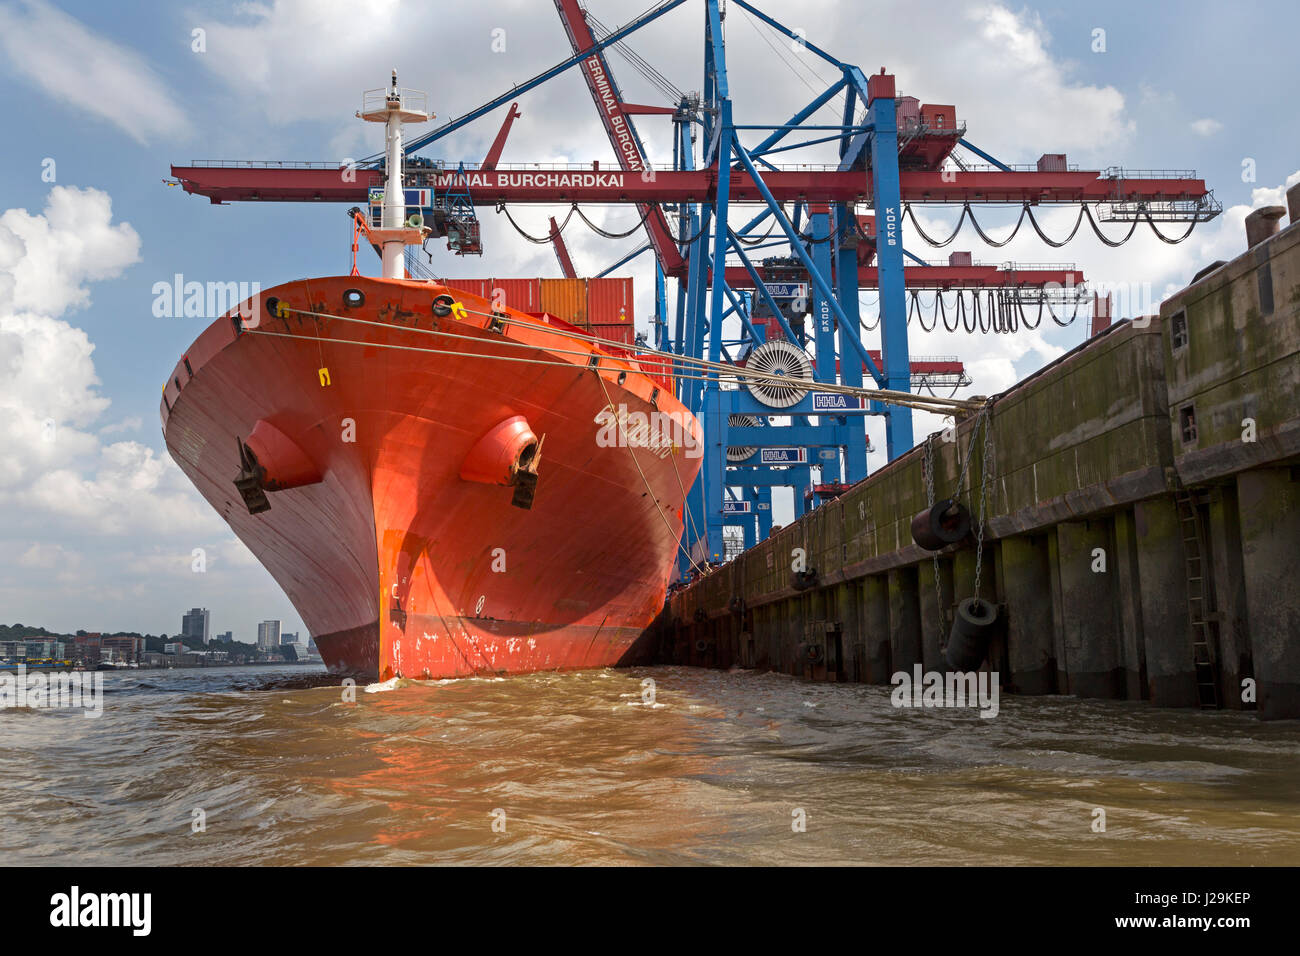 Container ship at the containerterminal Burchardkai, Hamburg harbor, Germany, Europe Stock Photo